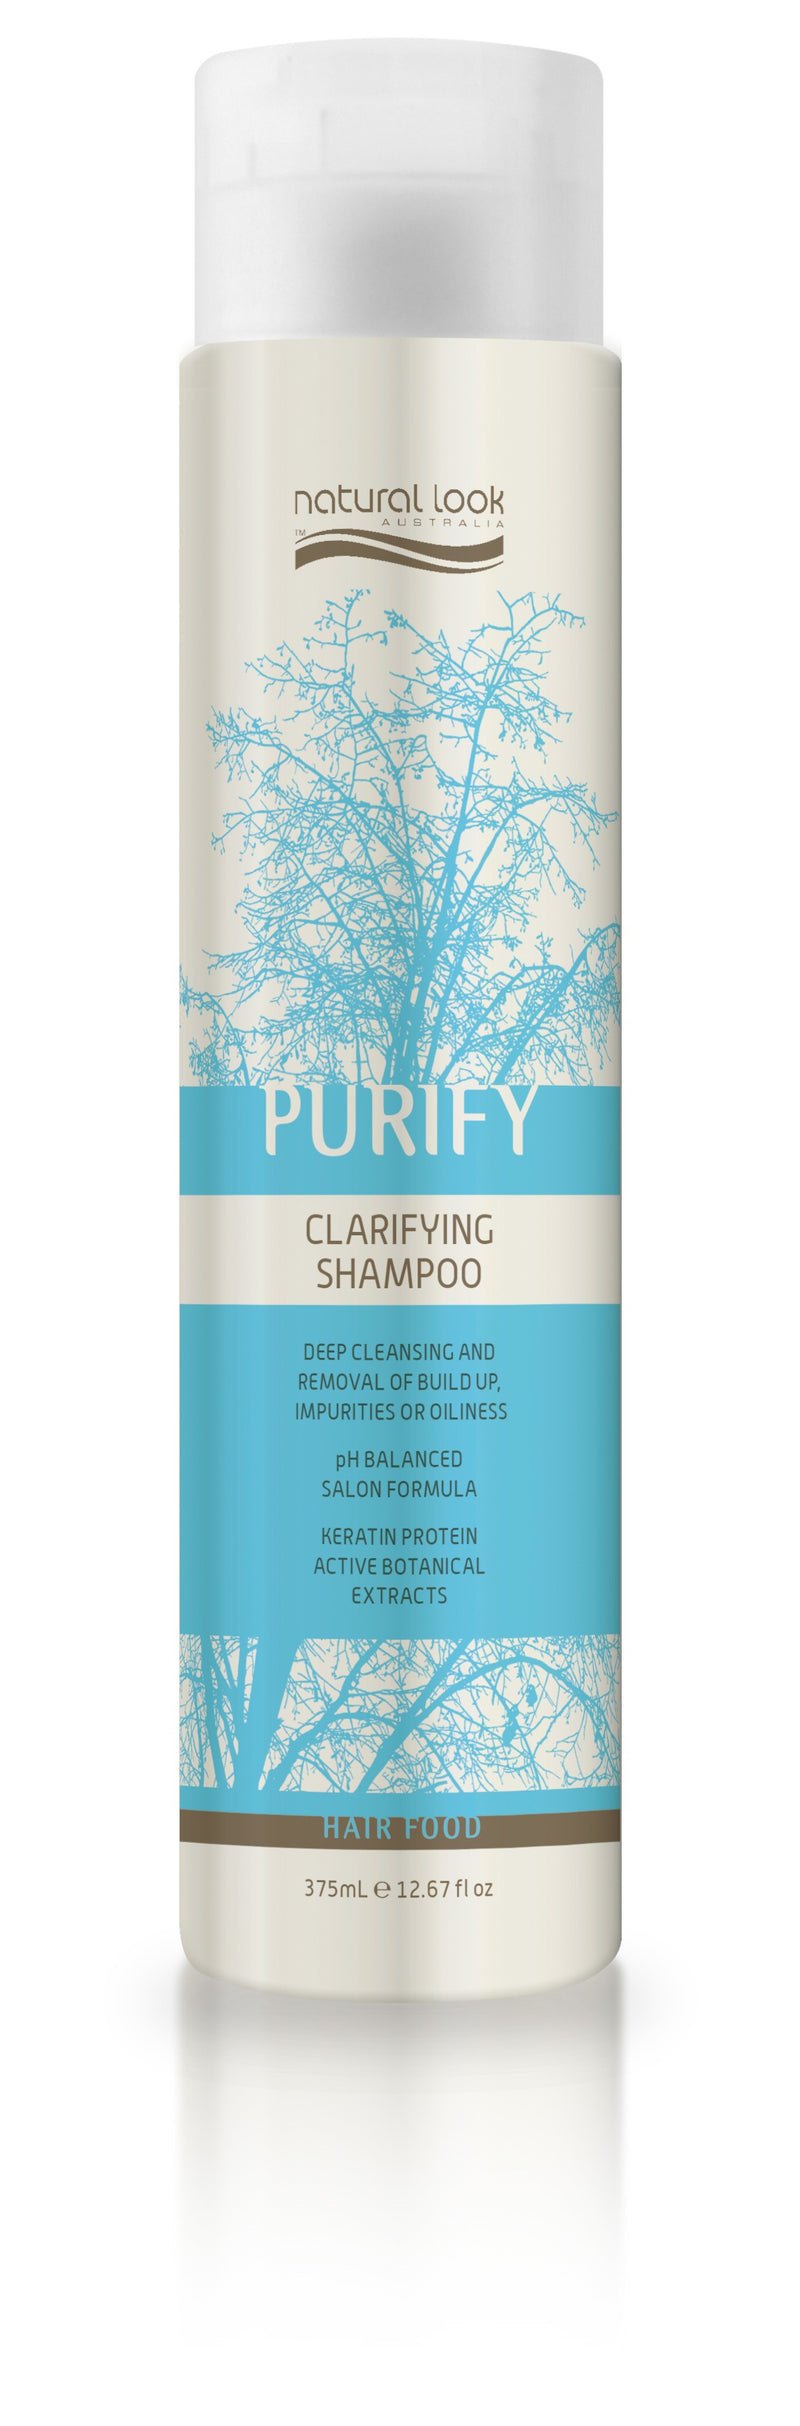 Natural Look Purify Clarifying Shampoo 375ml